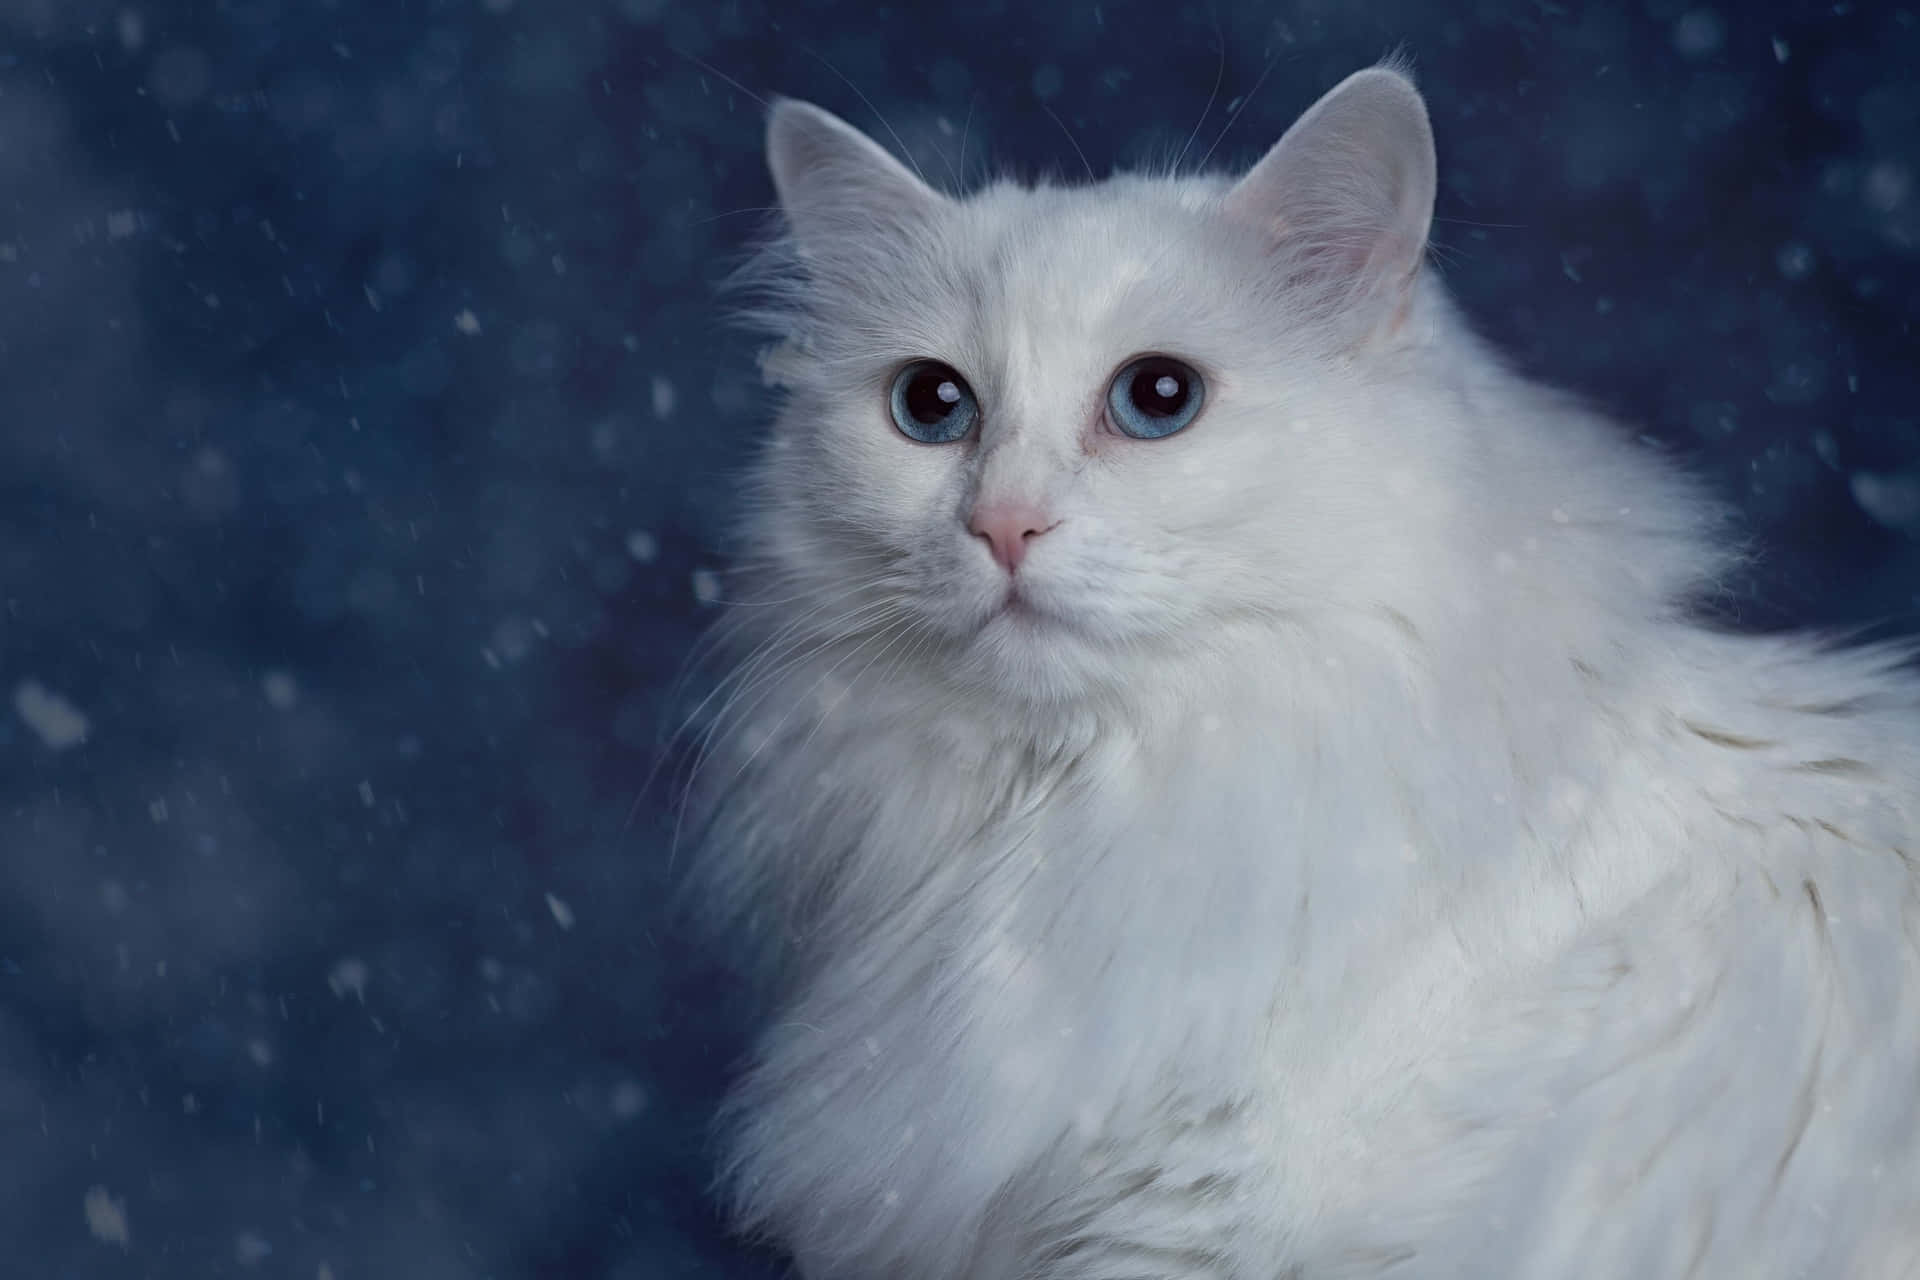 Stunning portrait of a majestic white cat.